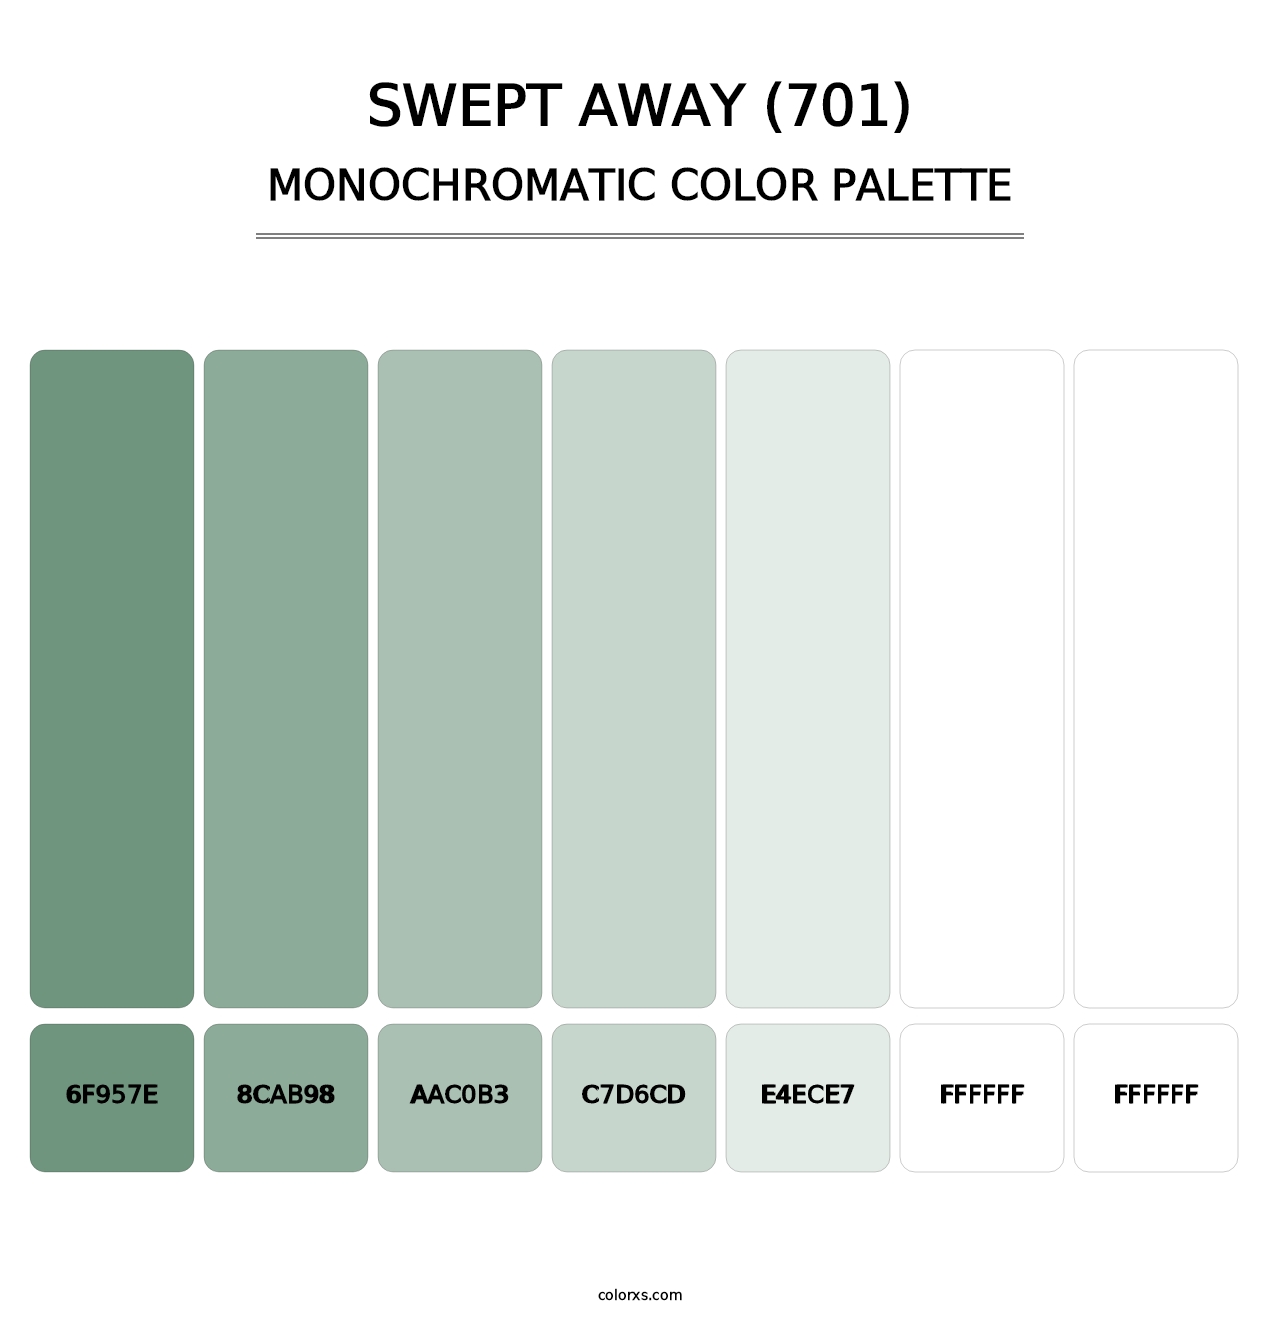 Swept Away (701) - Monochromatic Color Palette